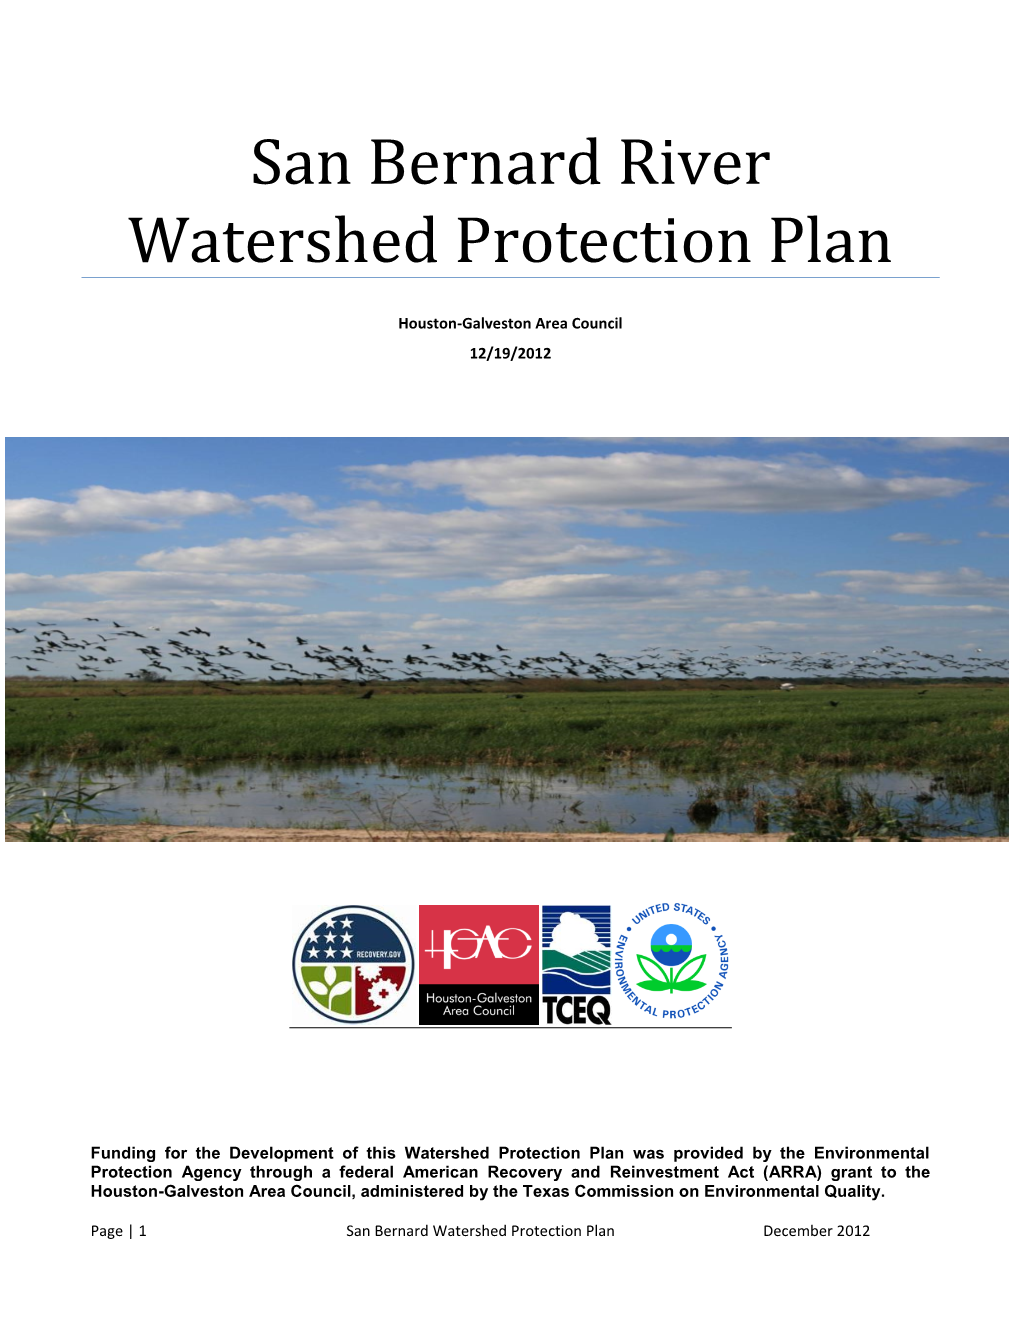 San Bernard River Watershed Protection Plan